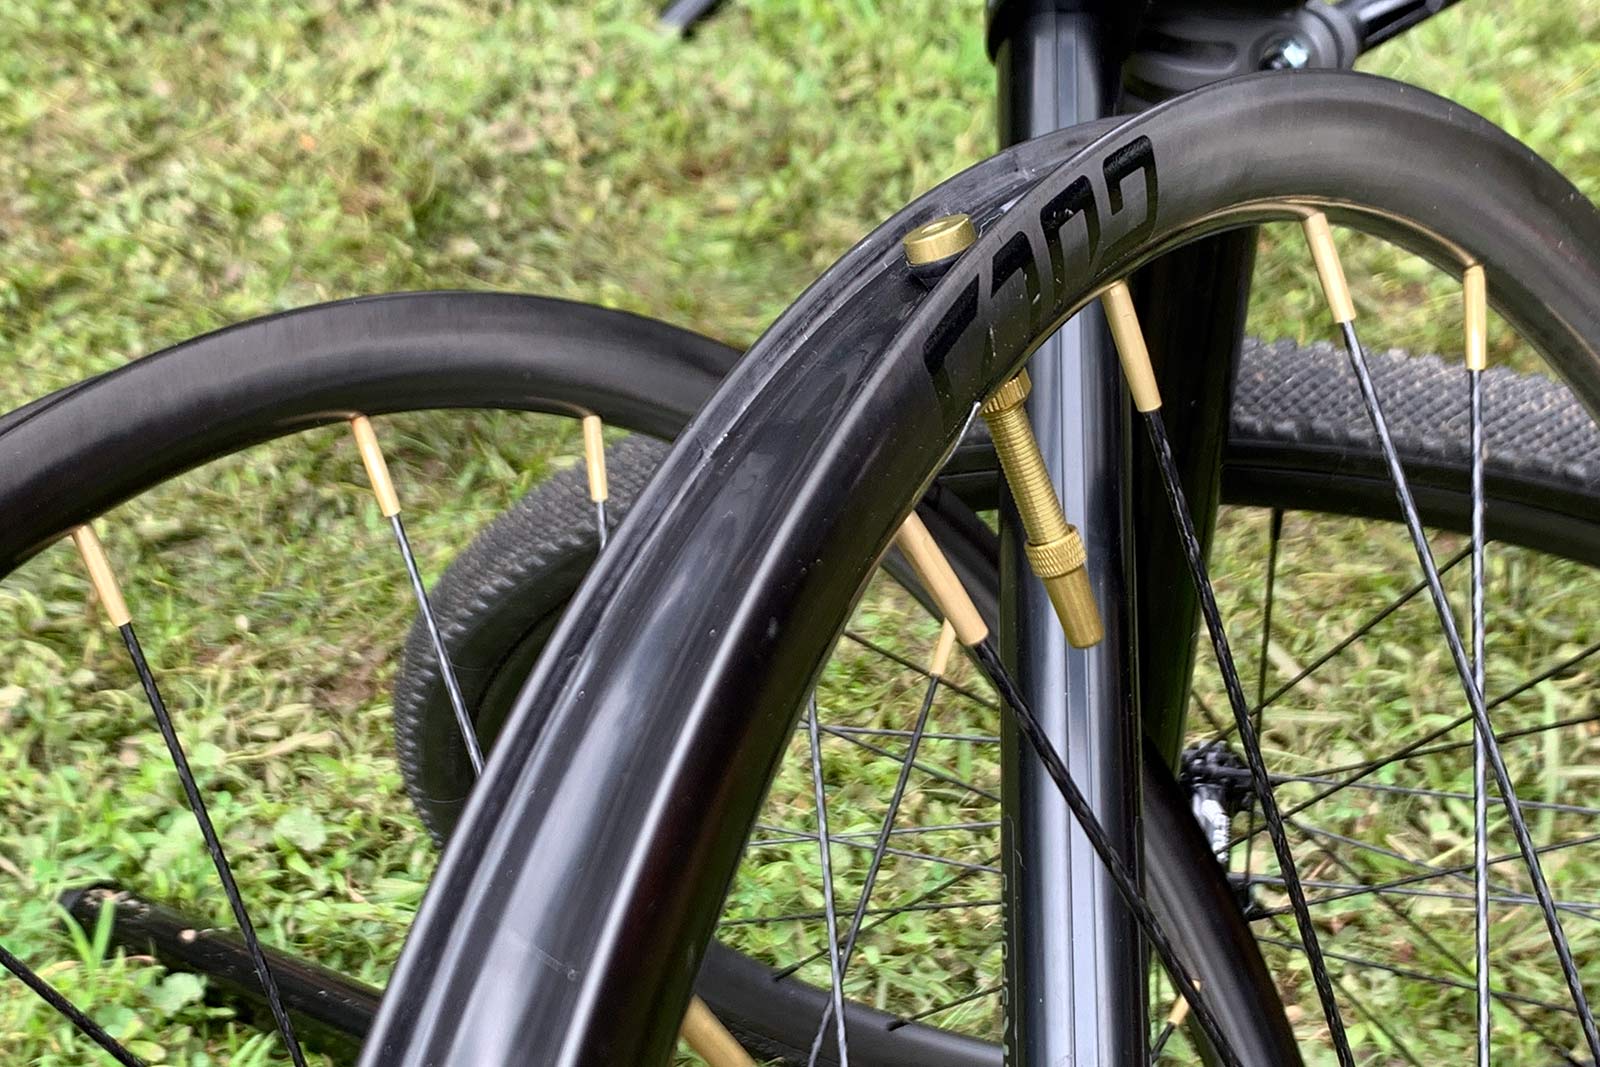 ultralight carbon fiber rim and spoke gravel wheels from Gulo Composites